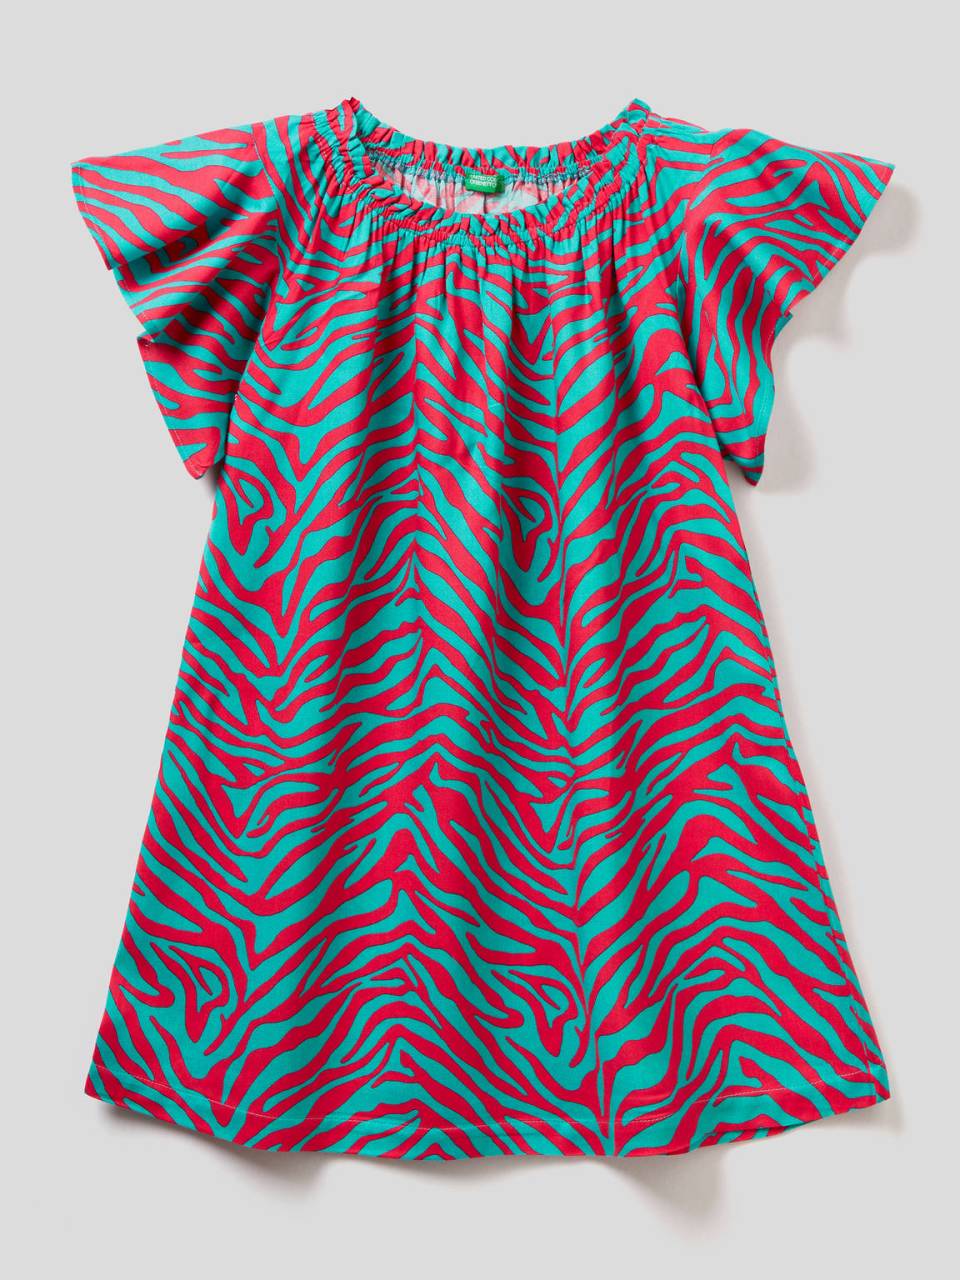 Benetton Animal pattern beach cover-up dress. 1